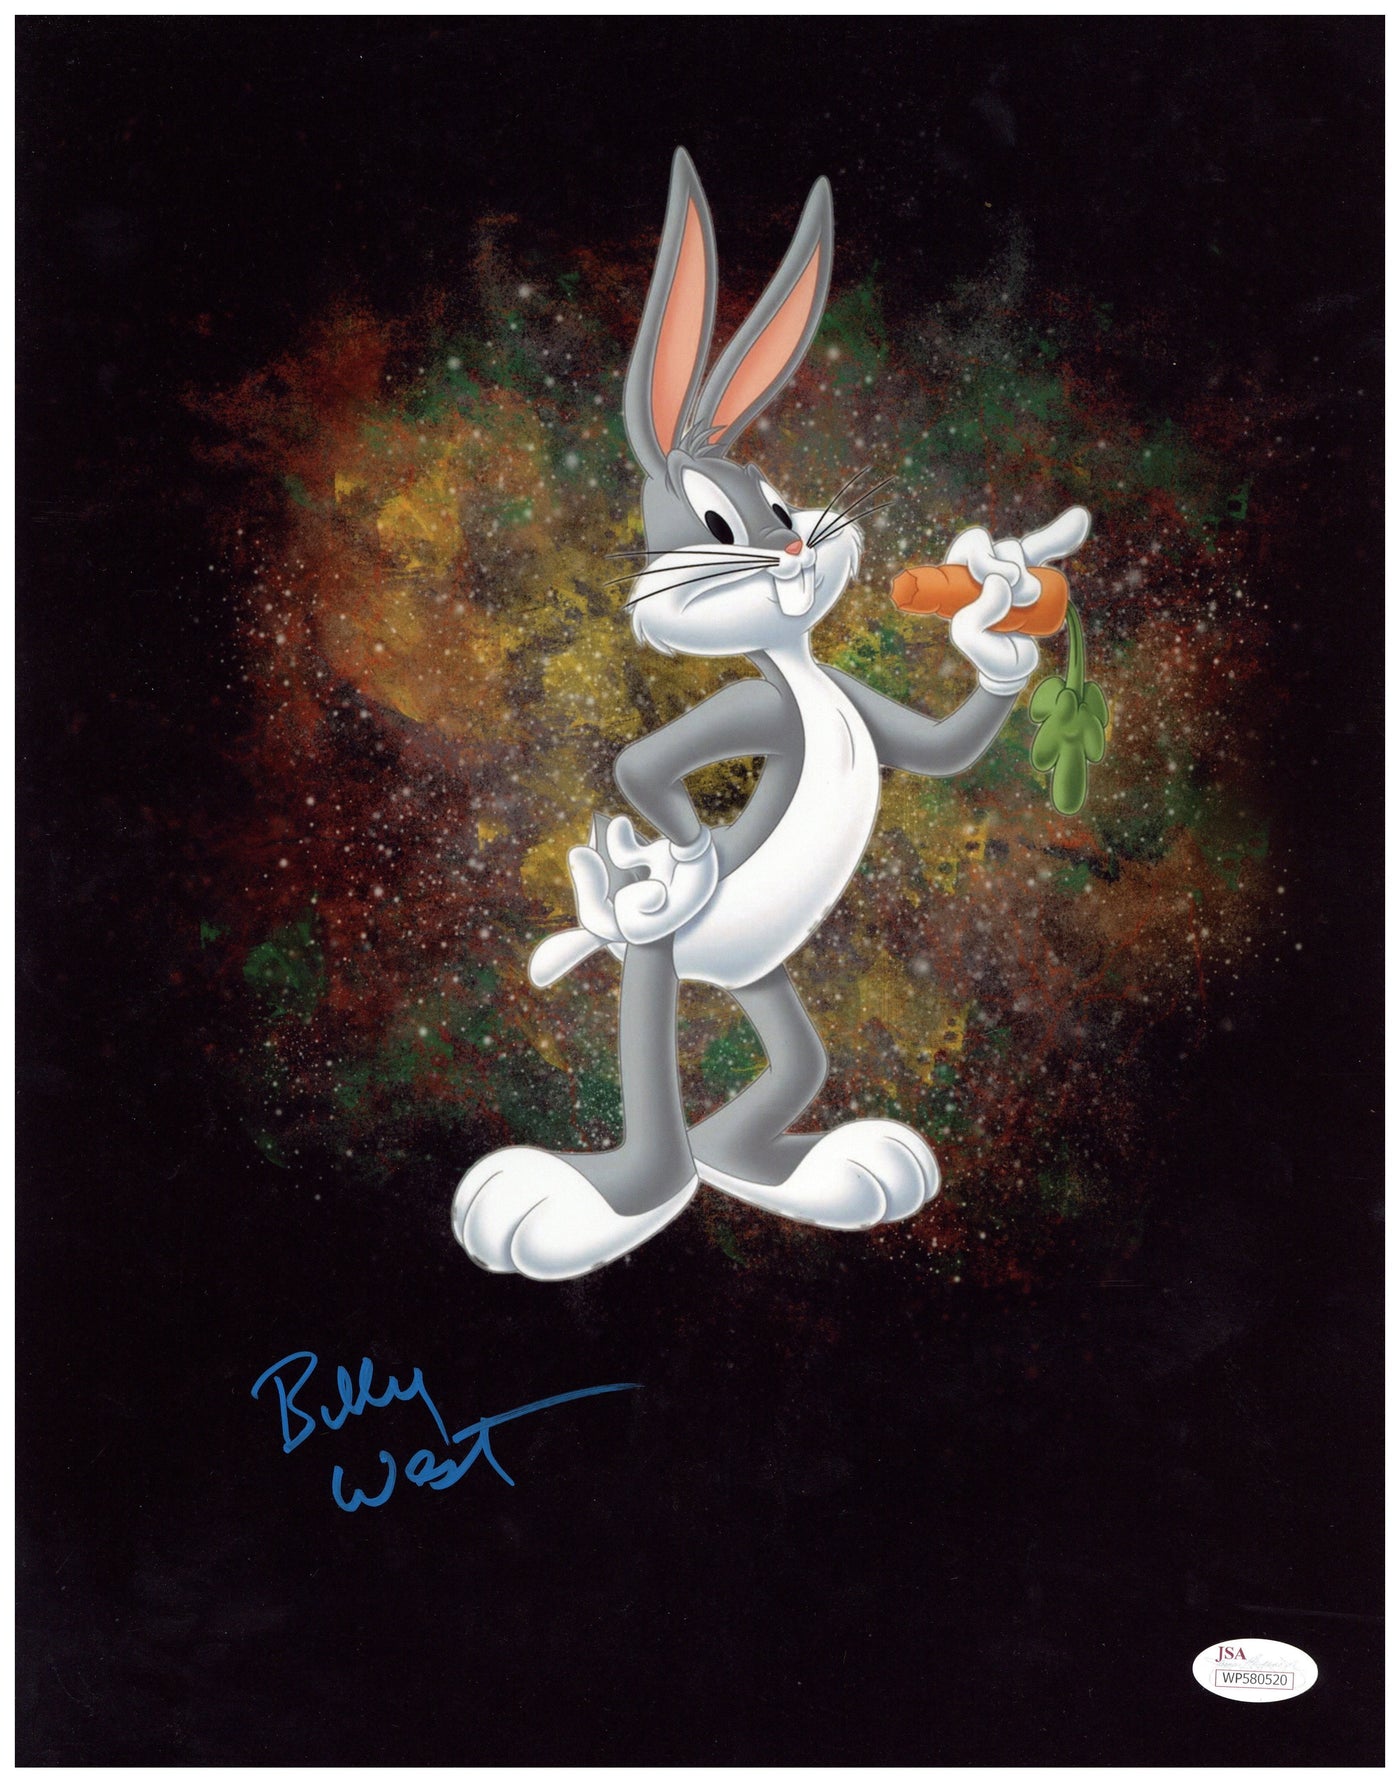 Billy West Signed 11x14 Photo Bugs Bunny Autographed JSA COA